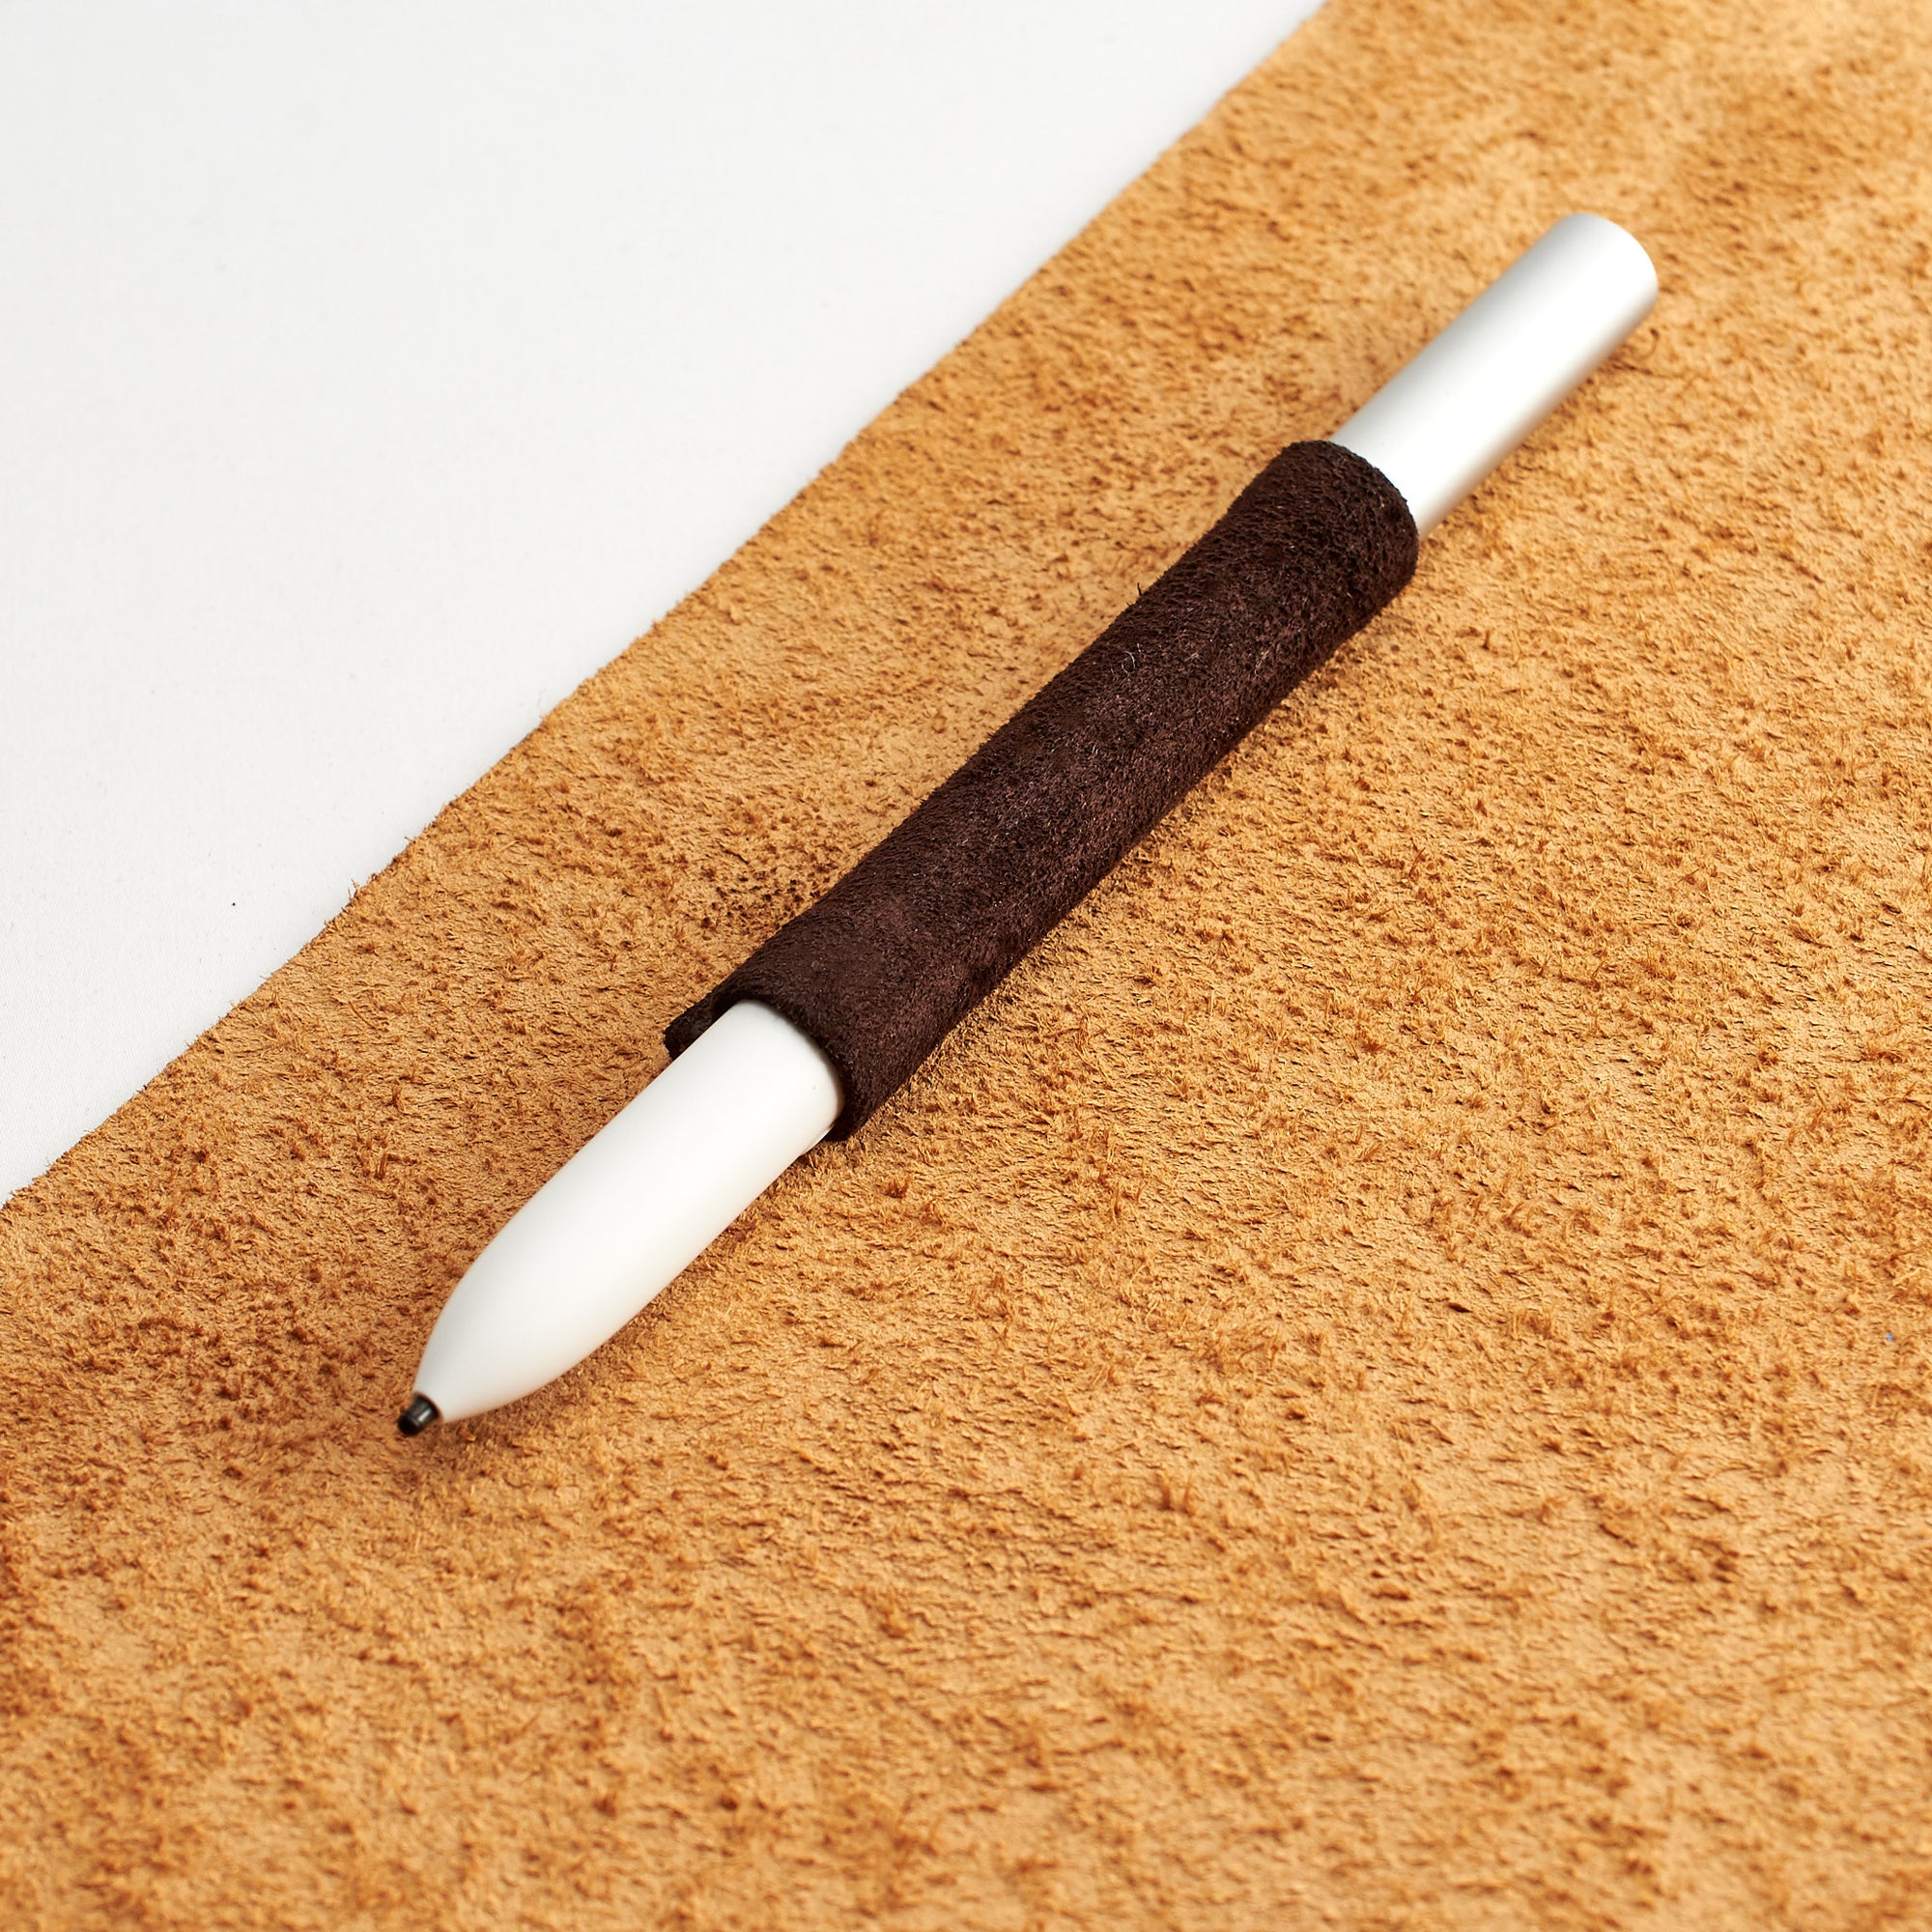 ASUS Pen holder. ASUS Zenbook Pro Duo light brown leather sleeve for men